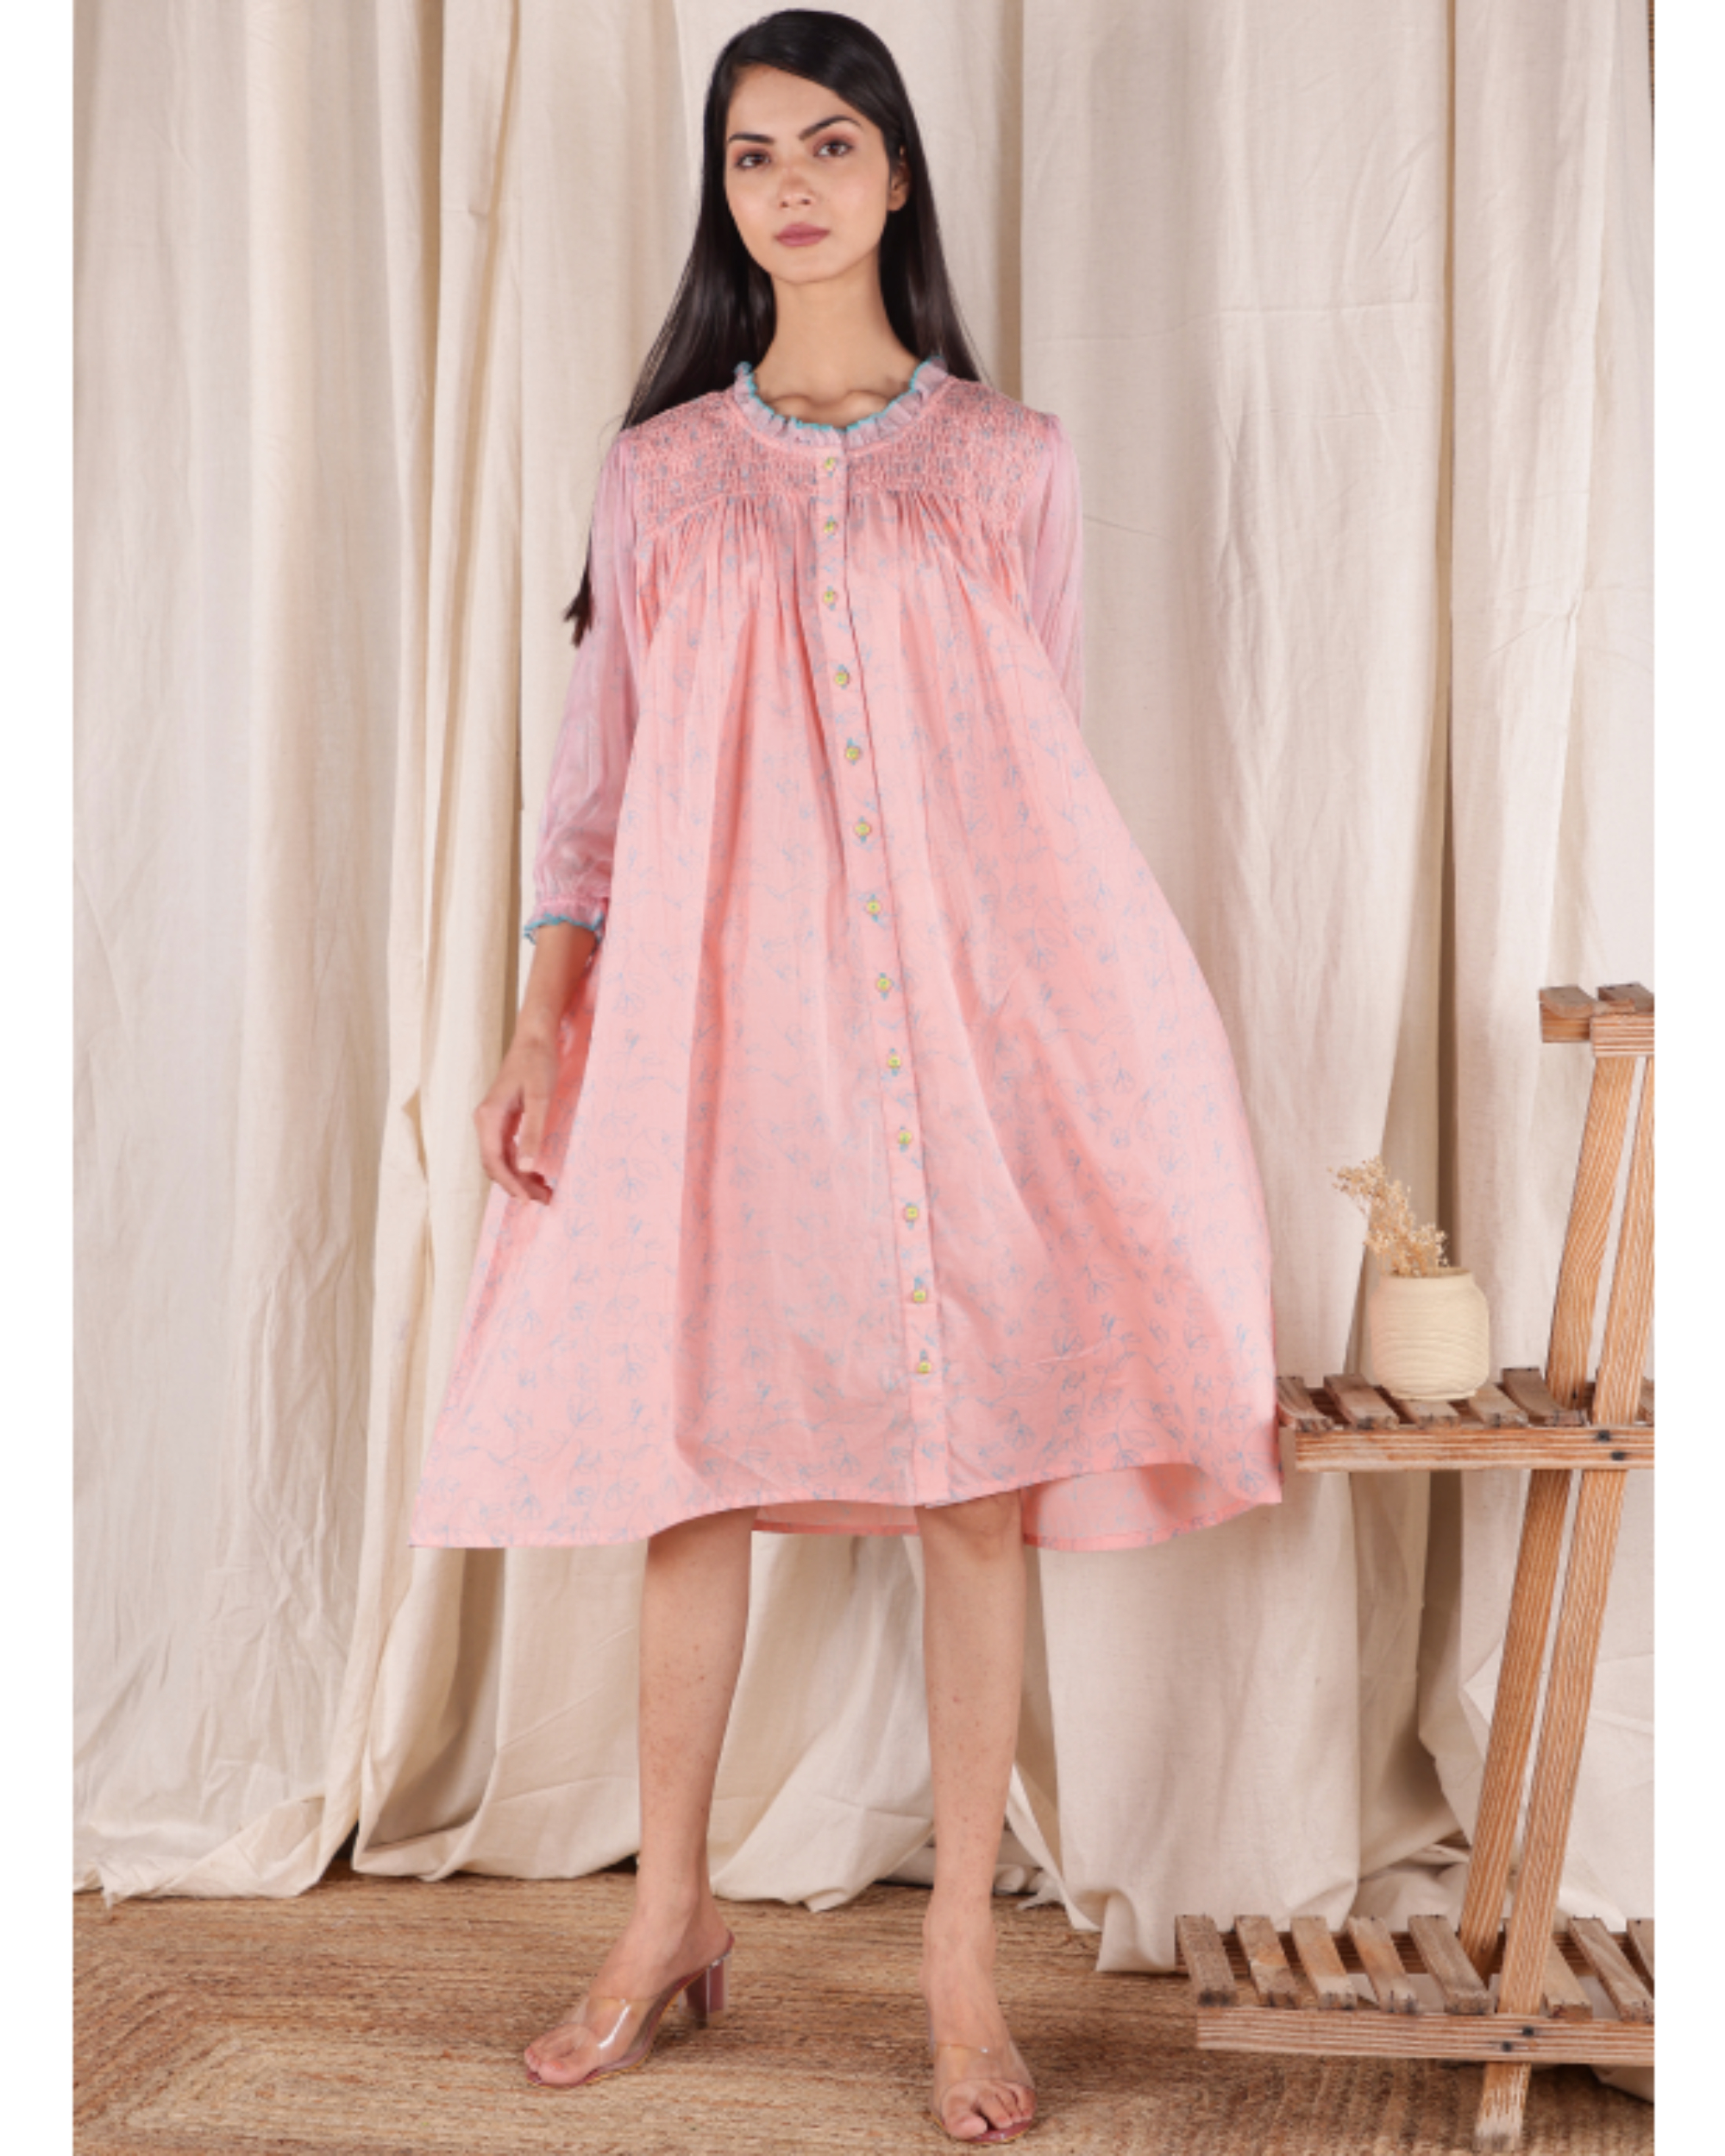 Light pink short flared dress